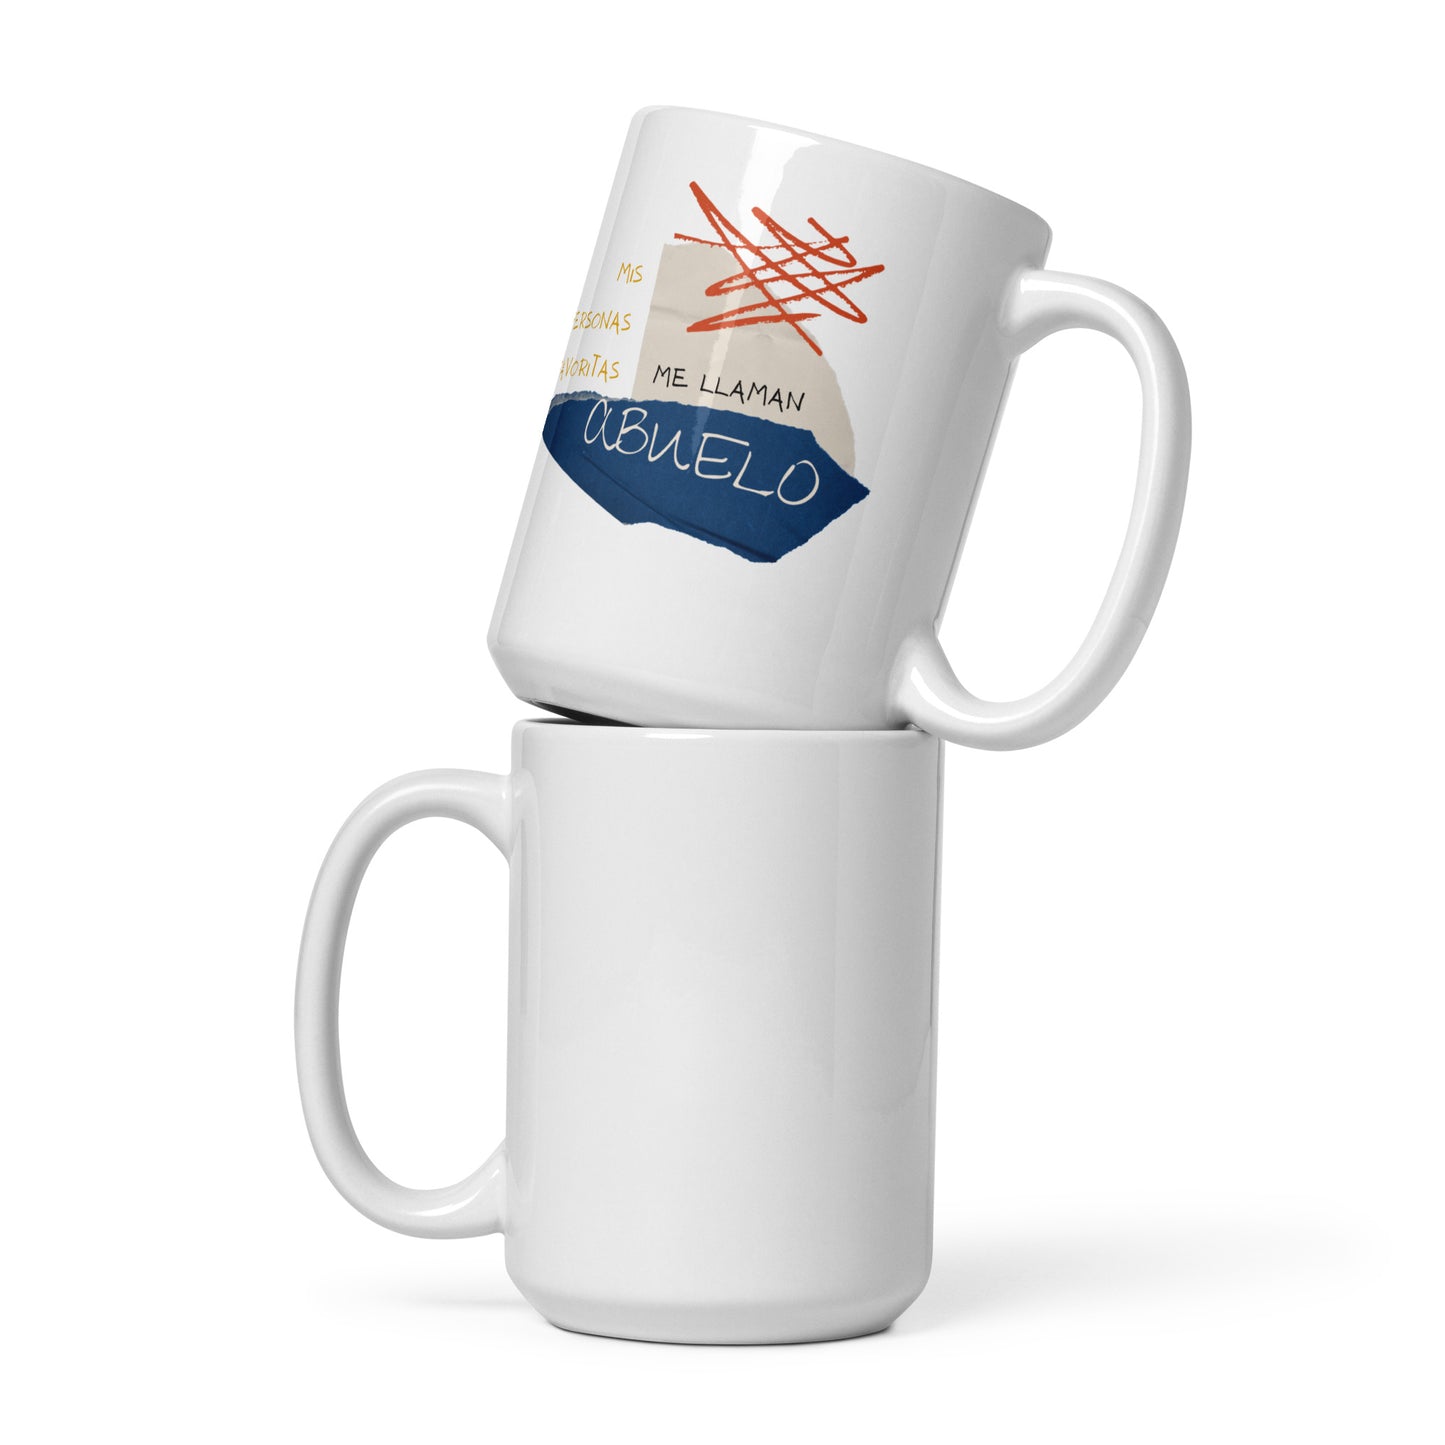 Abuelo - White glossy mug